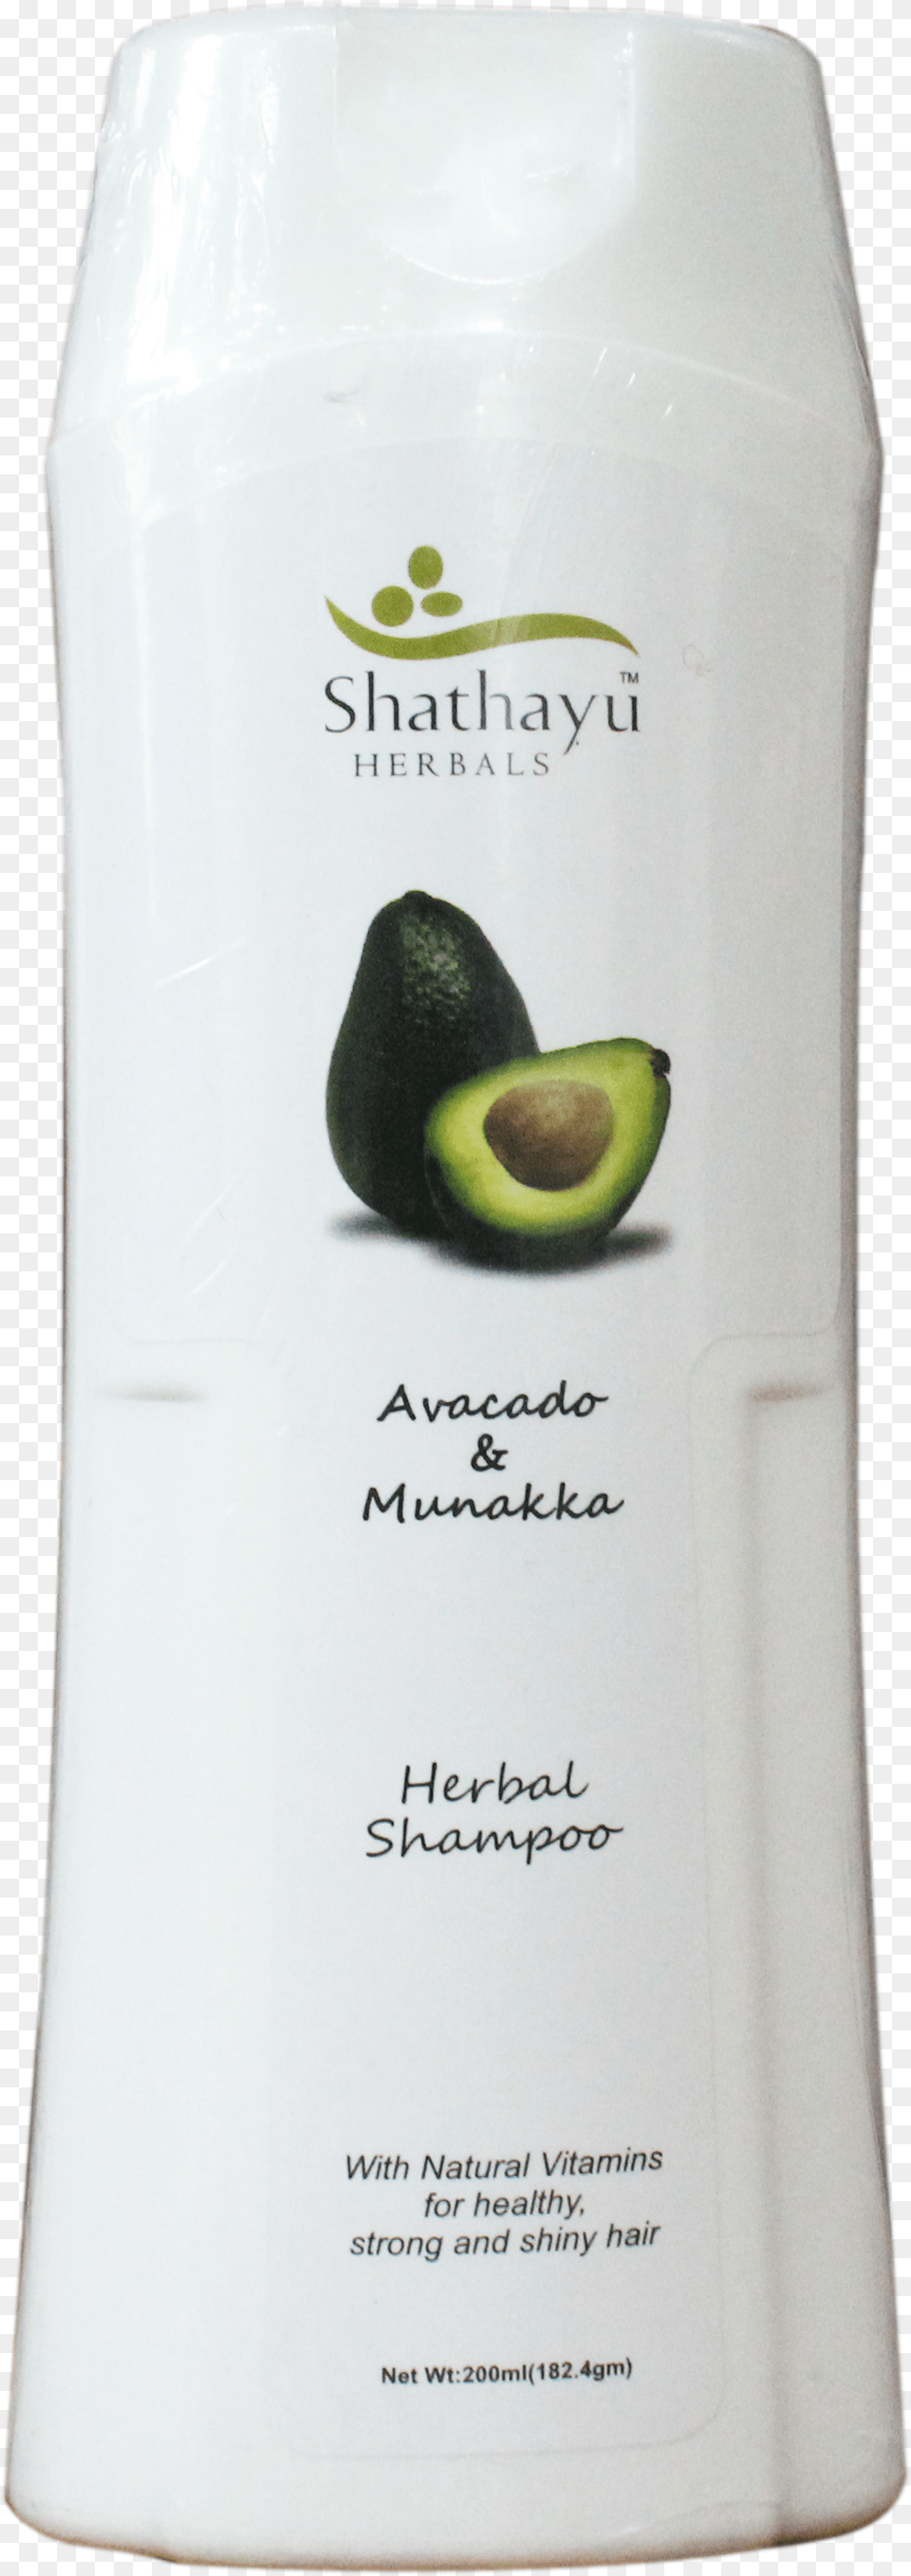 Avacado Amp Munakka Are The Two Natural Herbal Ingredients Almond, Avocado, Food, Fruit, Plant Png